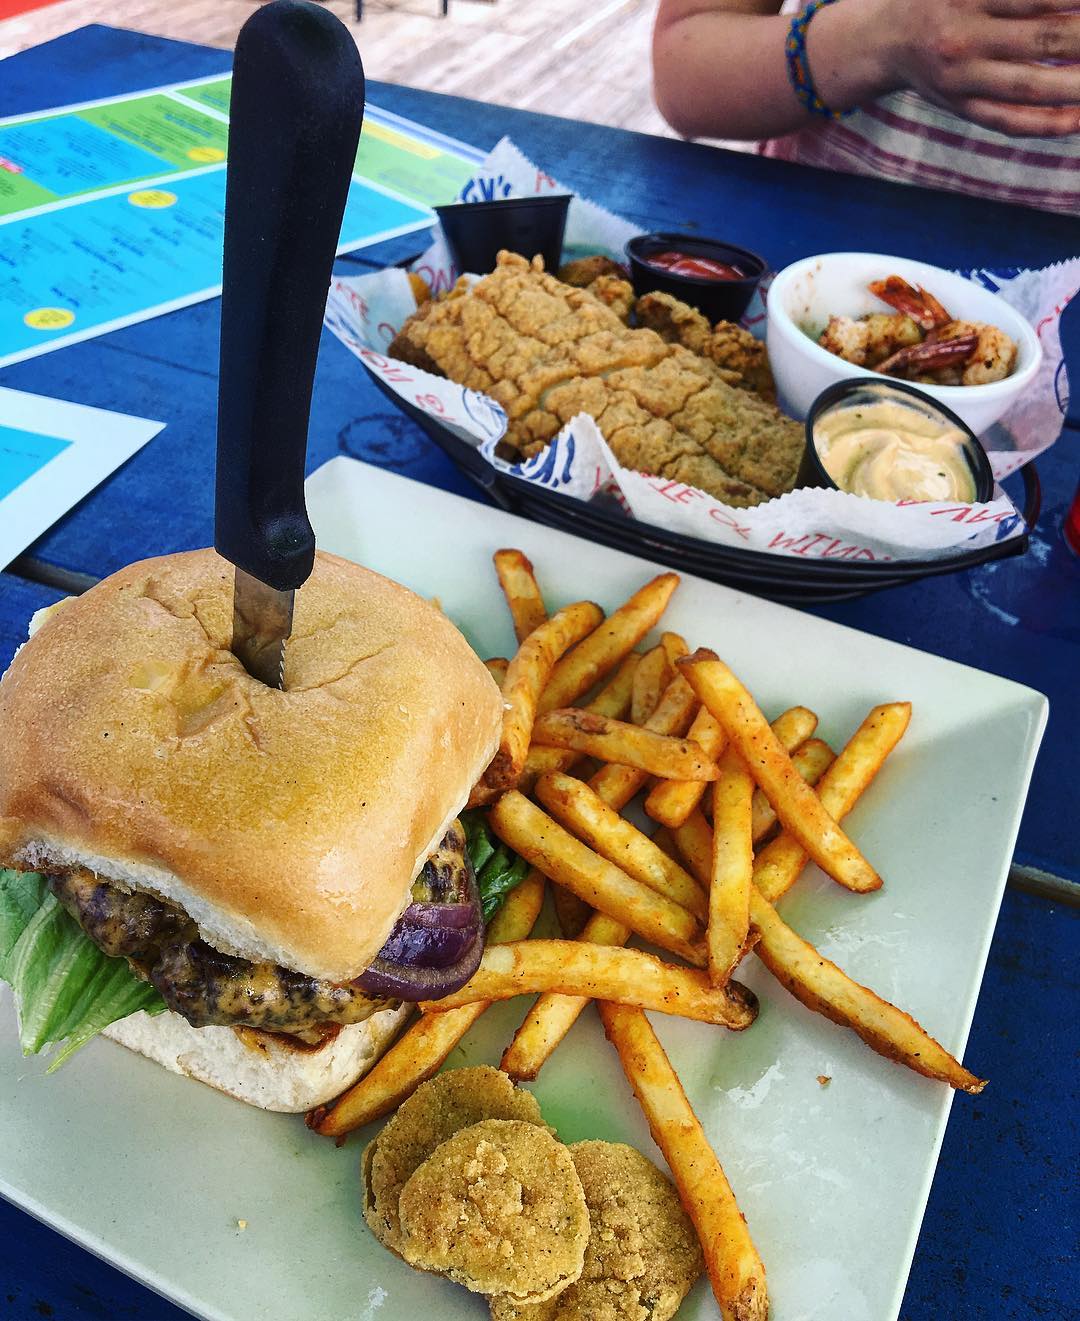 Pensacola Beach Restaurants - Shaggy’s Harbor Bar & Grill - Original Photo